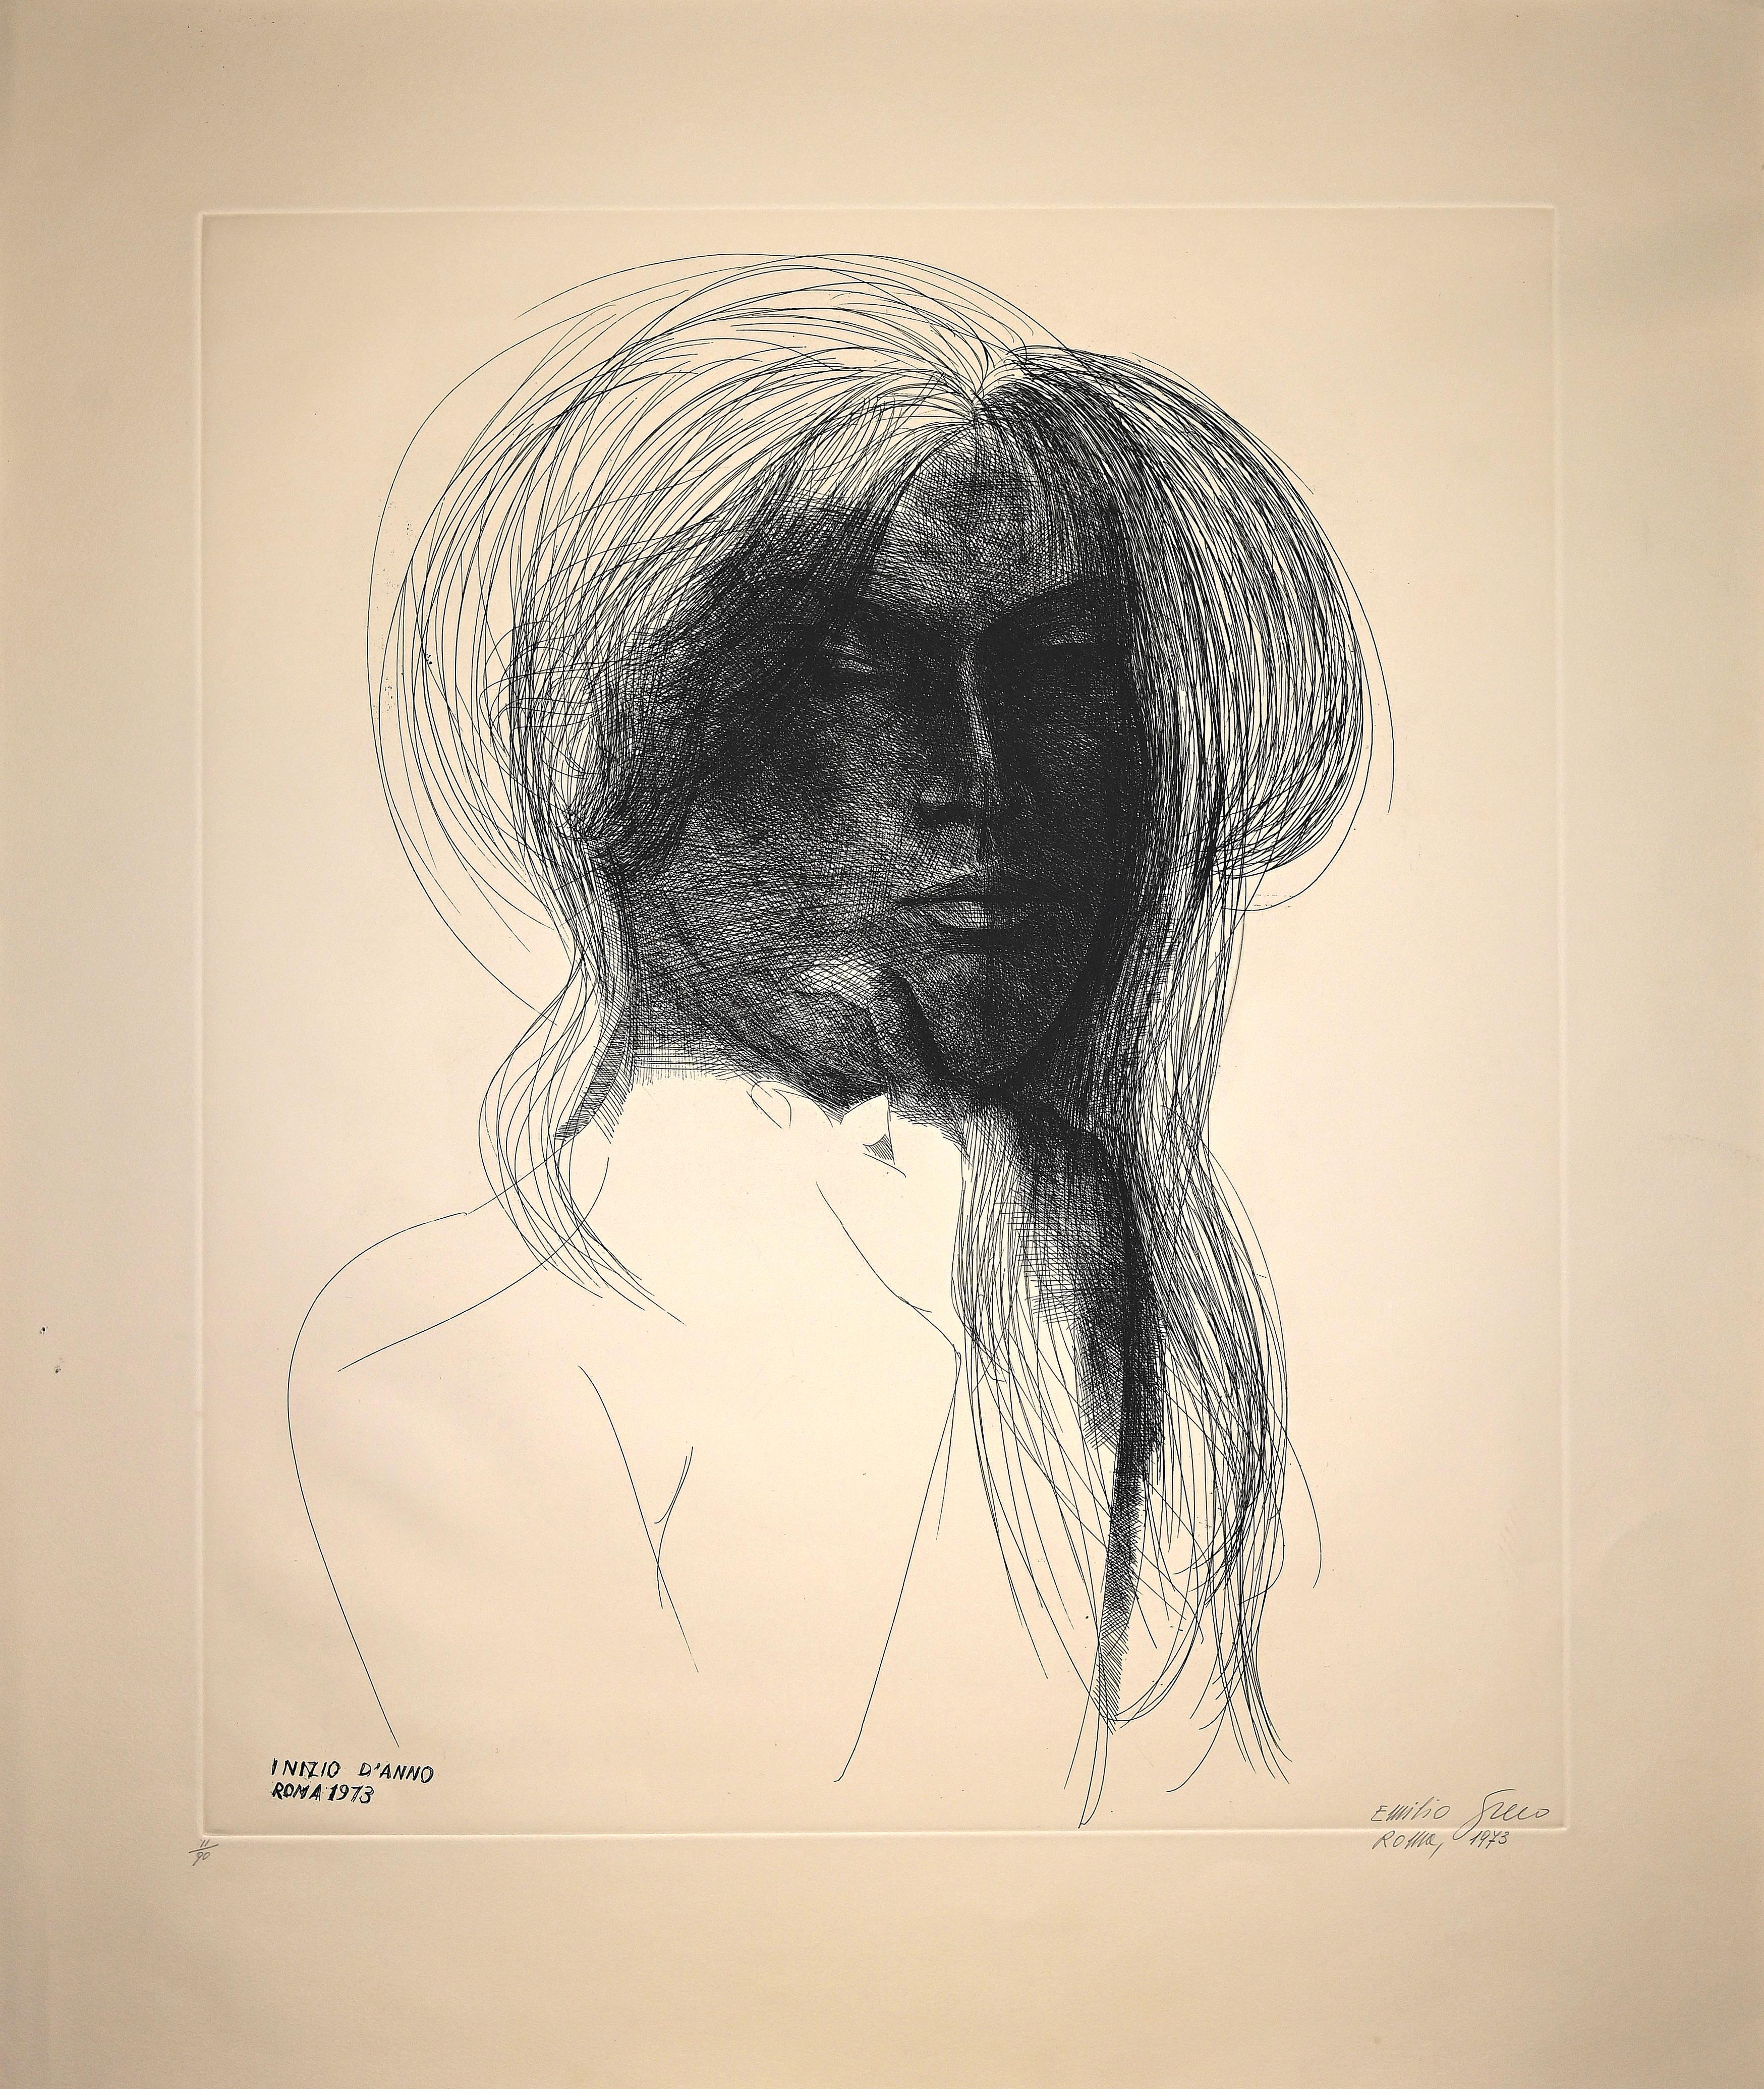 Nude Print Emilio Greco - Inizio d'Anno (Le début de l'année) - Gravure d'E. Greco - 1973